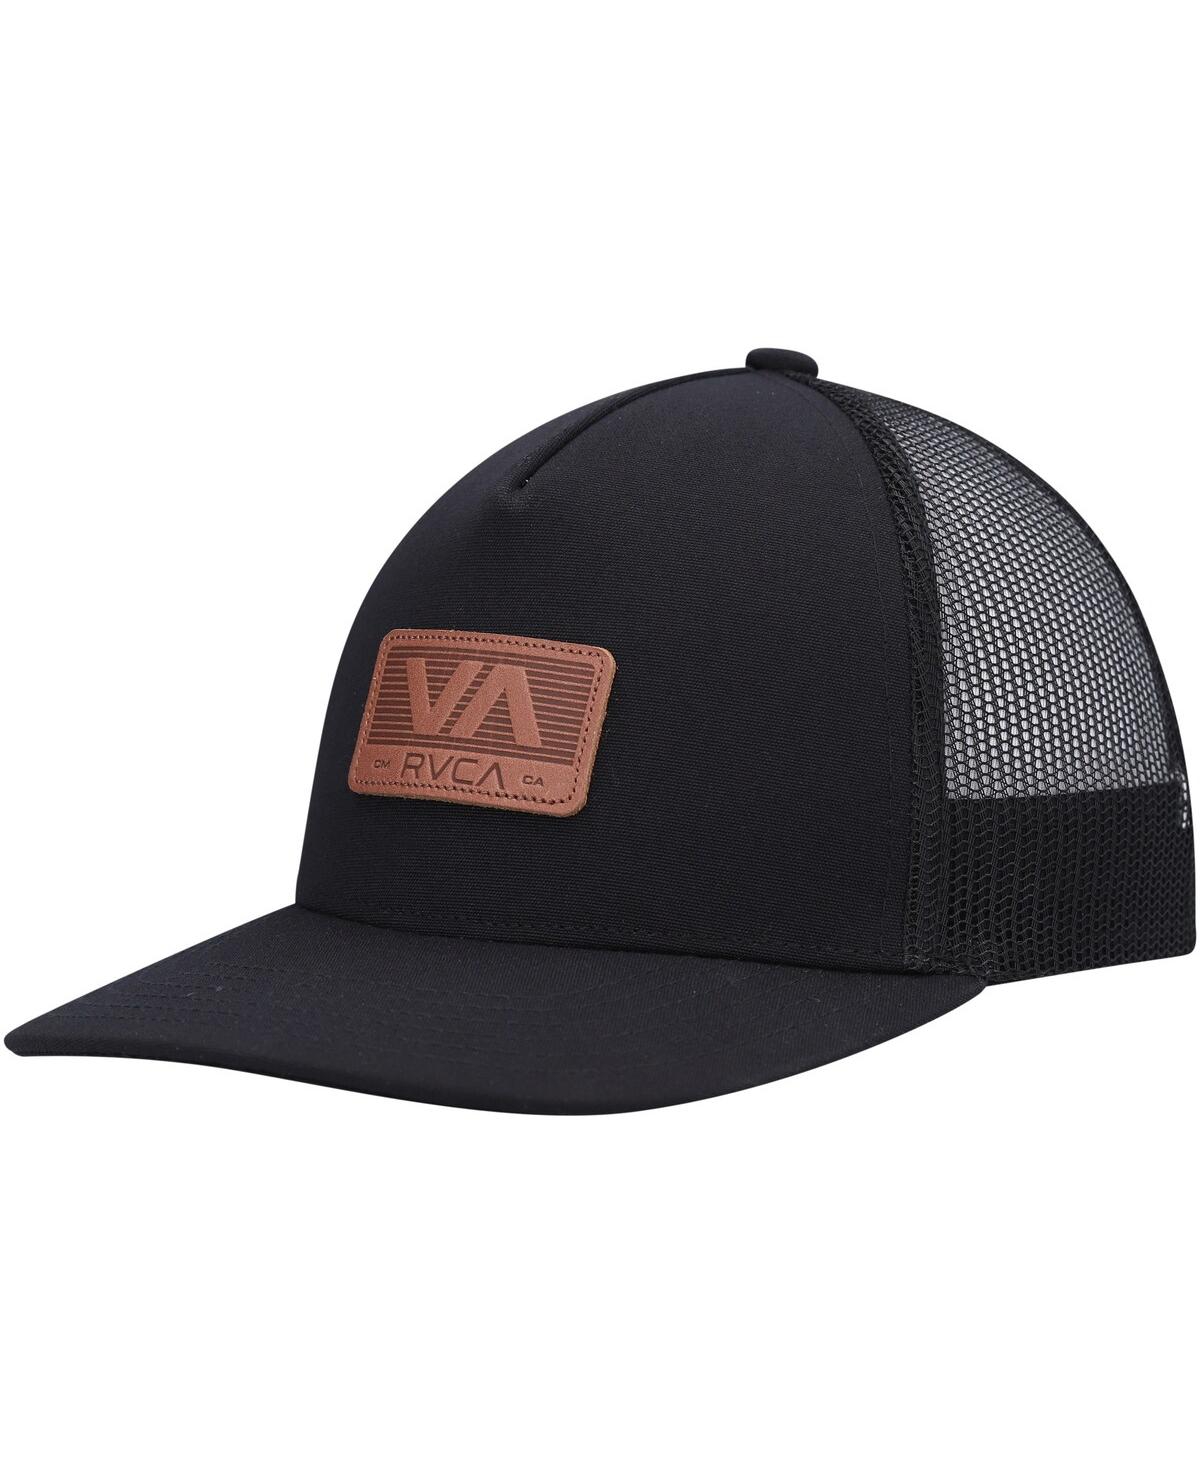 Rvca Men's  Black Shutter Trucker Snapback Hat